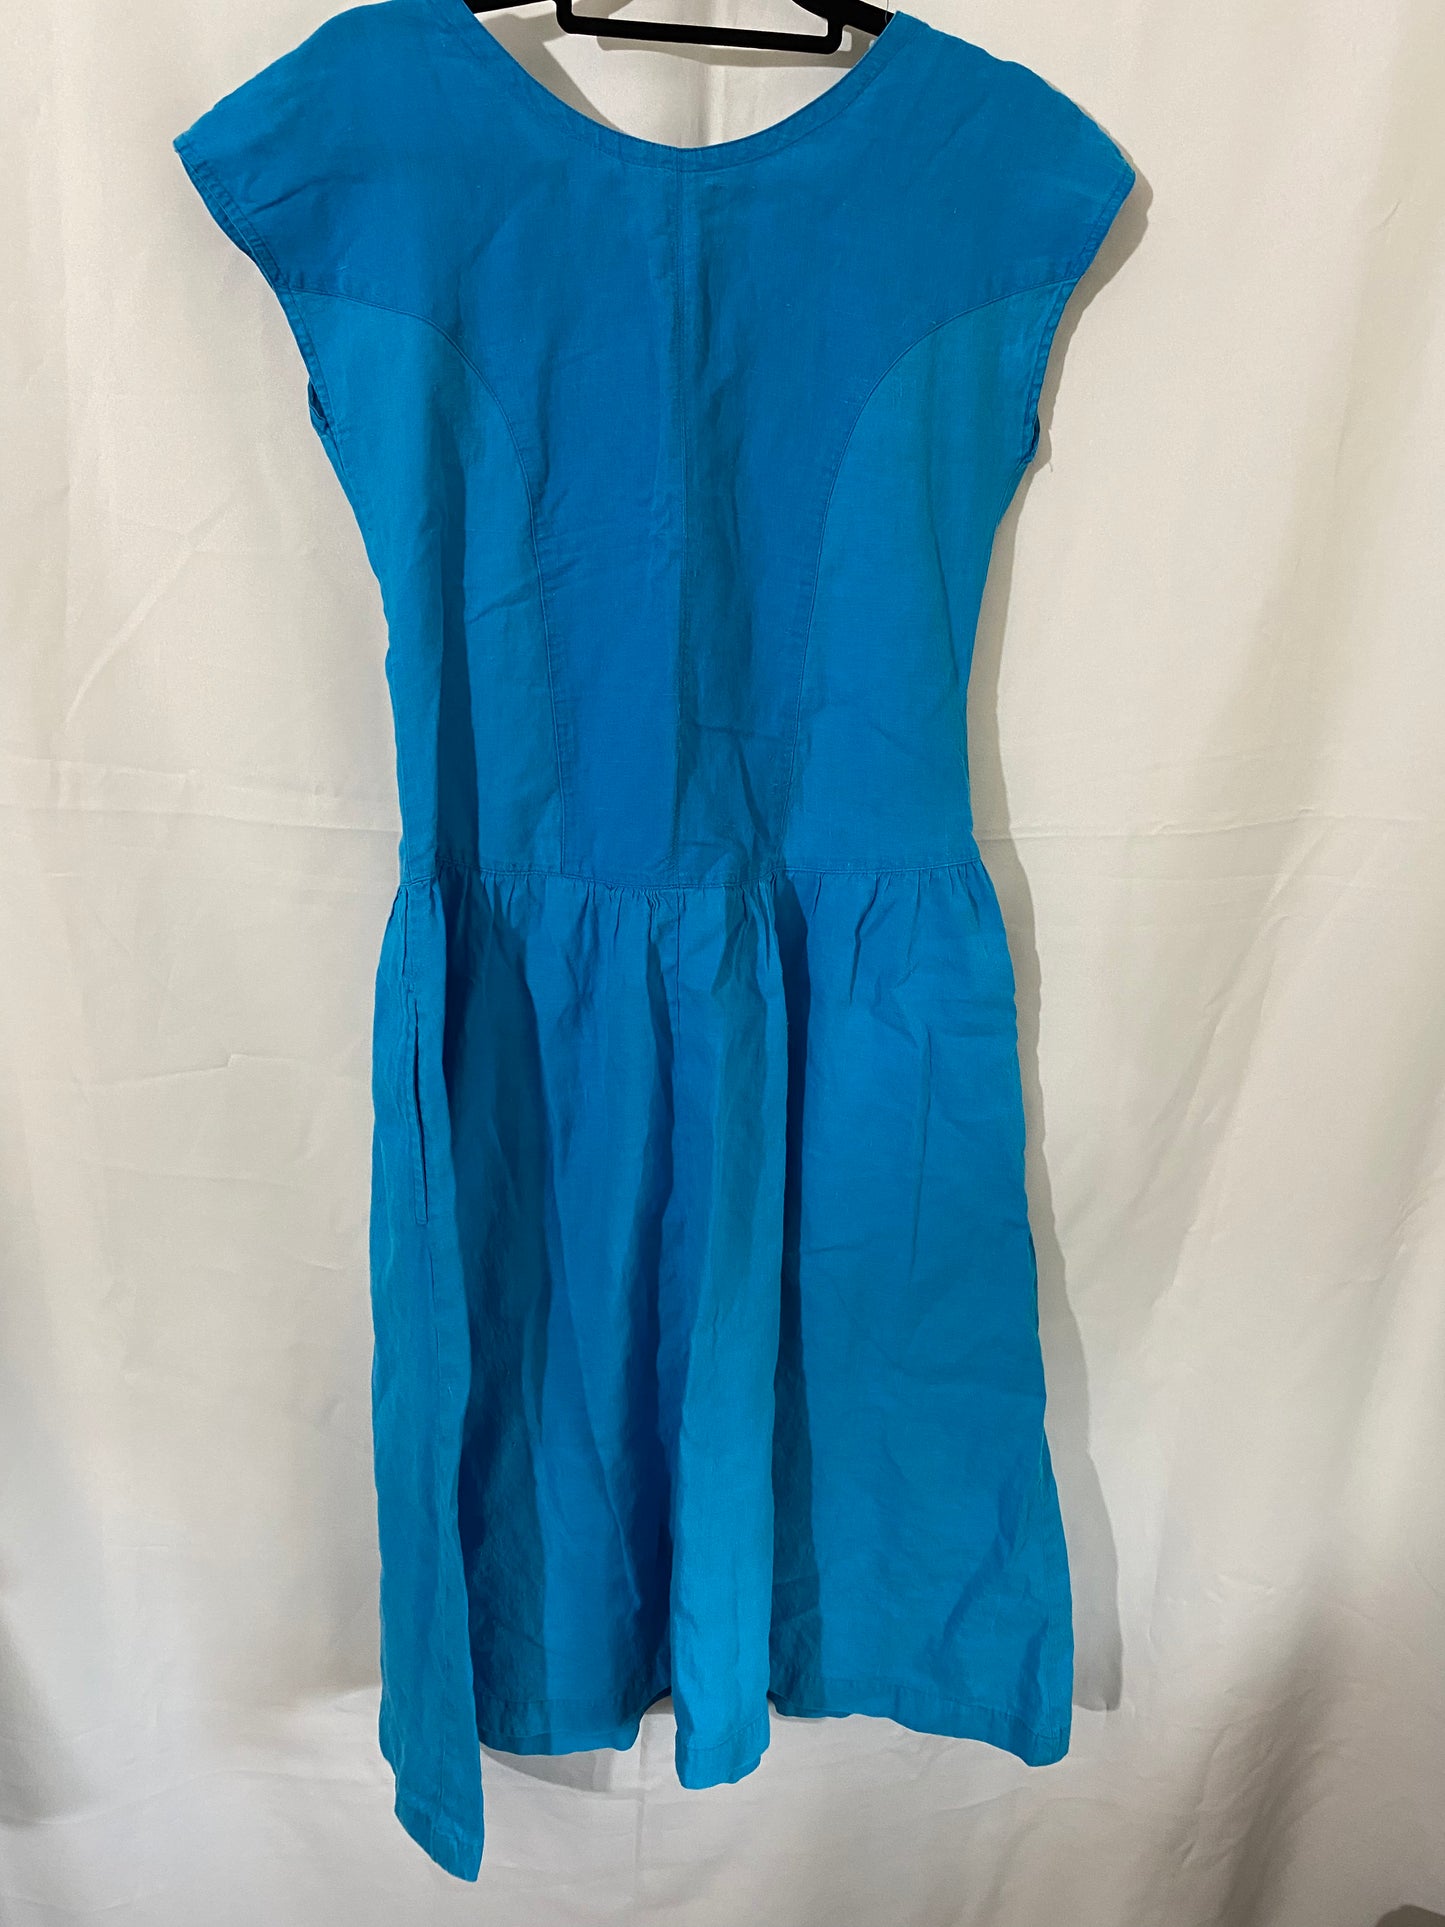 1980's Turquoise Dress